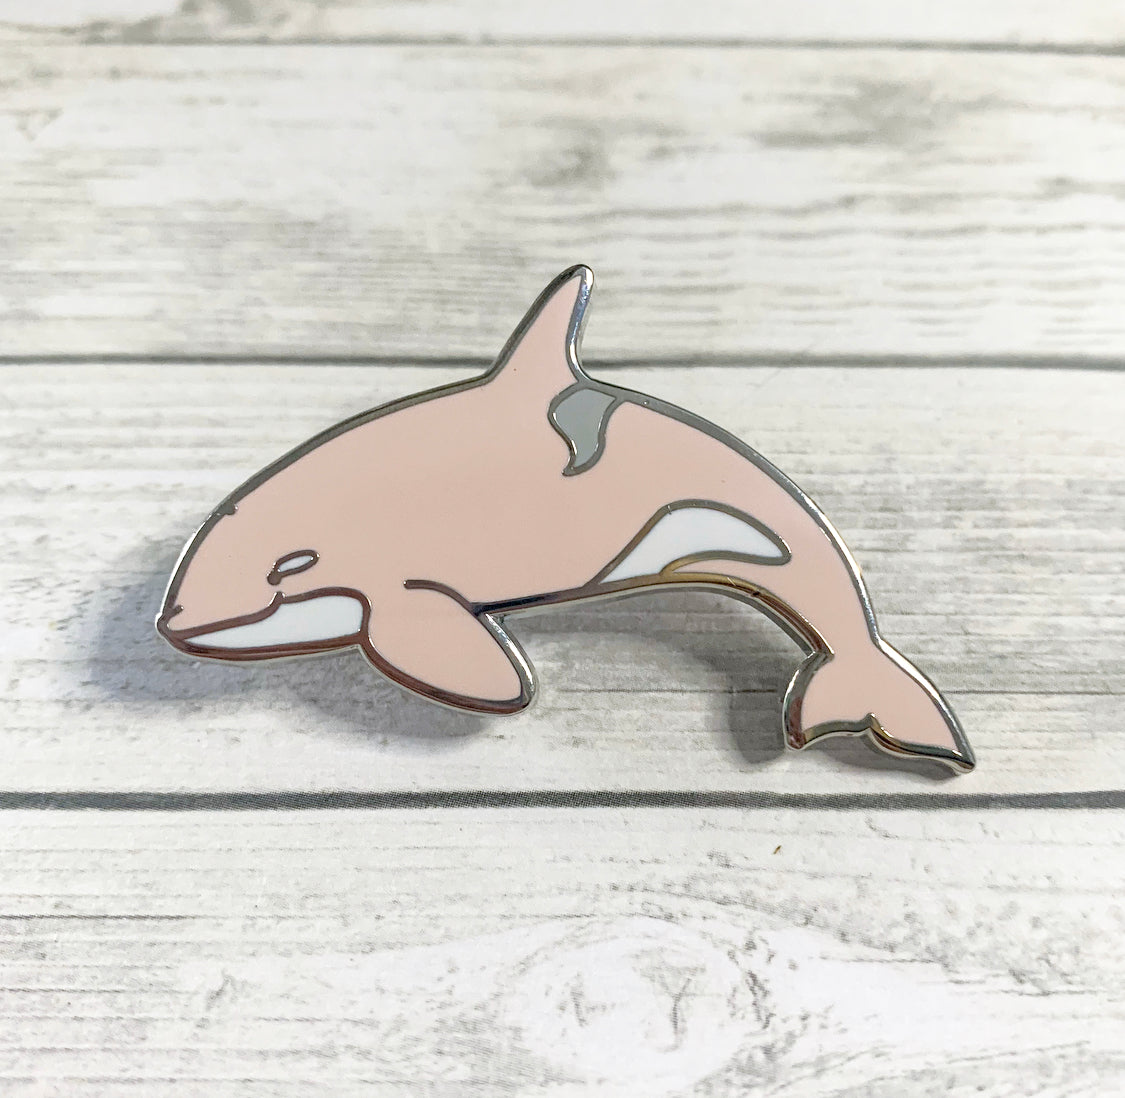 type d orca cetacean • donation pin pink